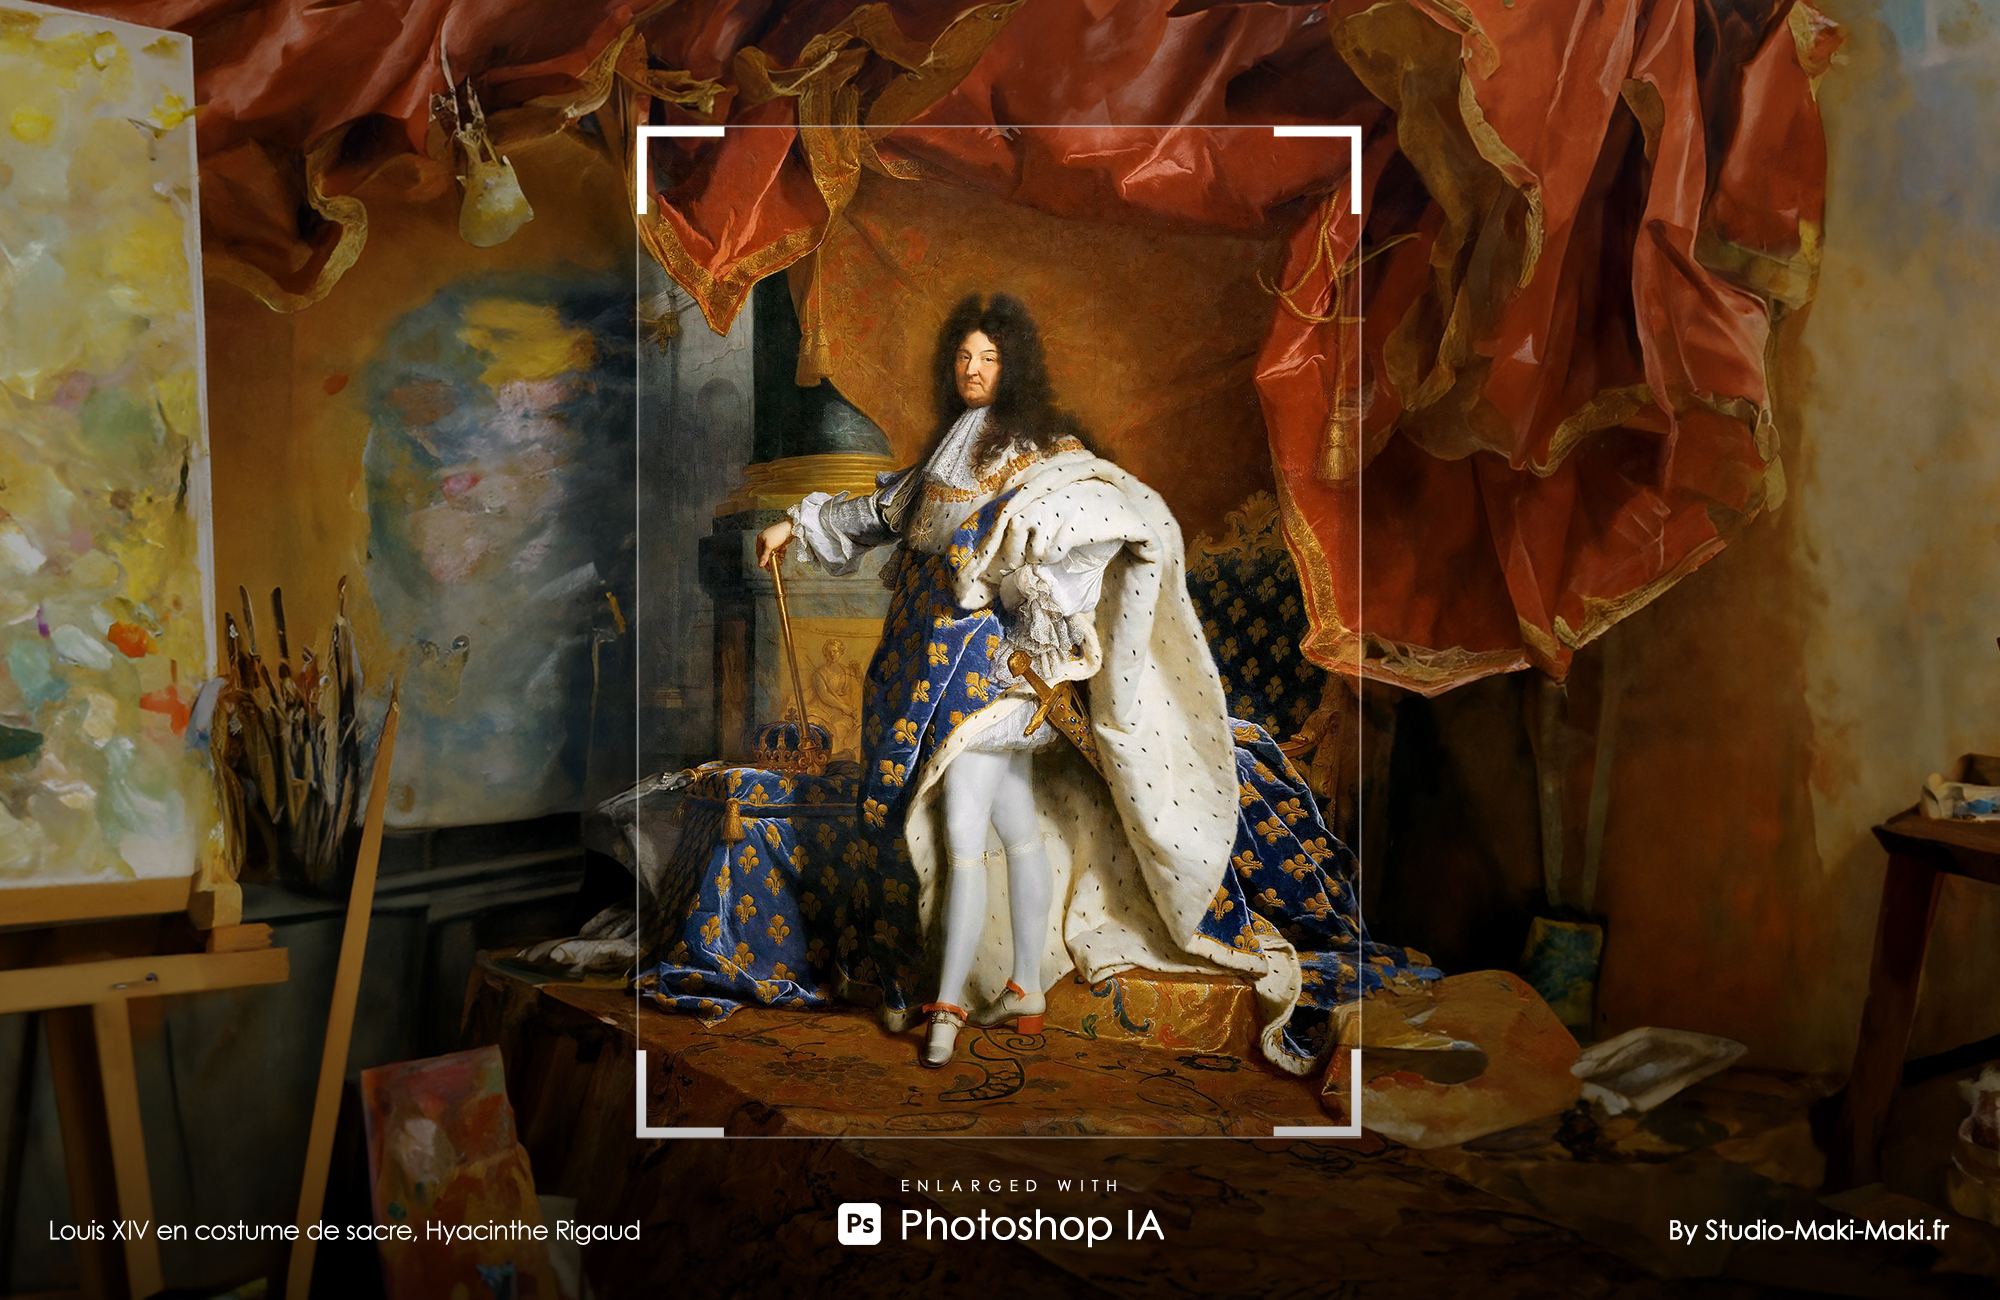 Louis XIV en costume de sacre, Hyacinthe Rigaud - Enlarged with Photoshop IA - By Studio Maki Maki